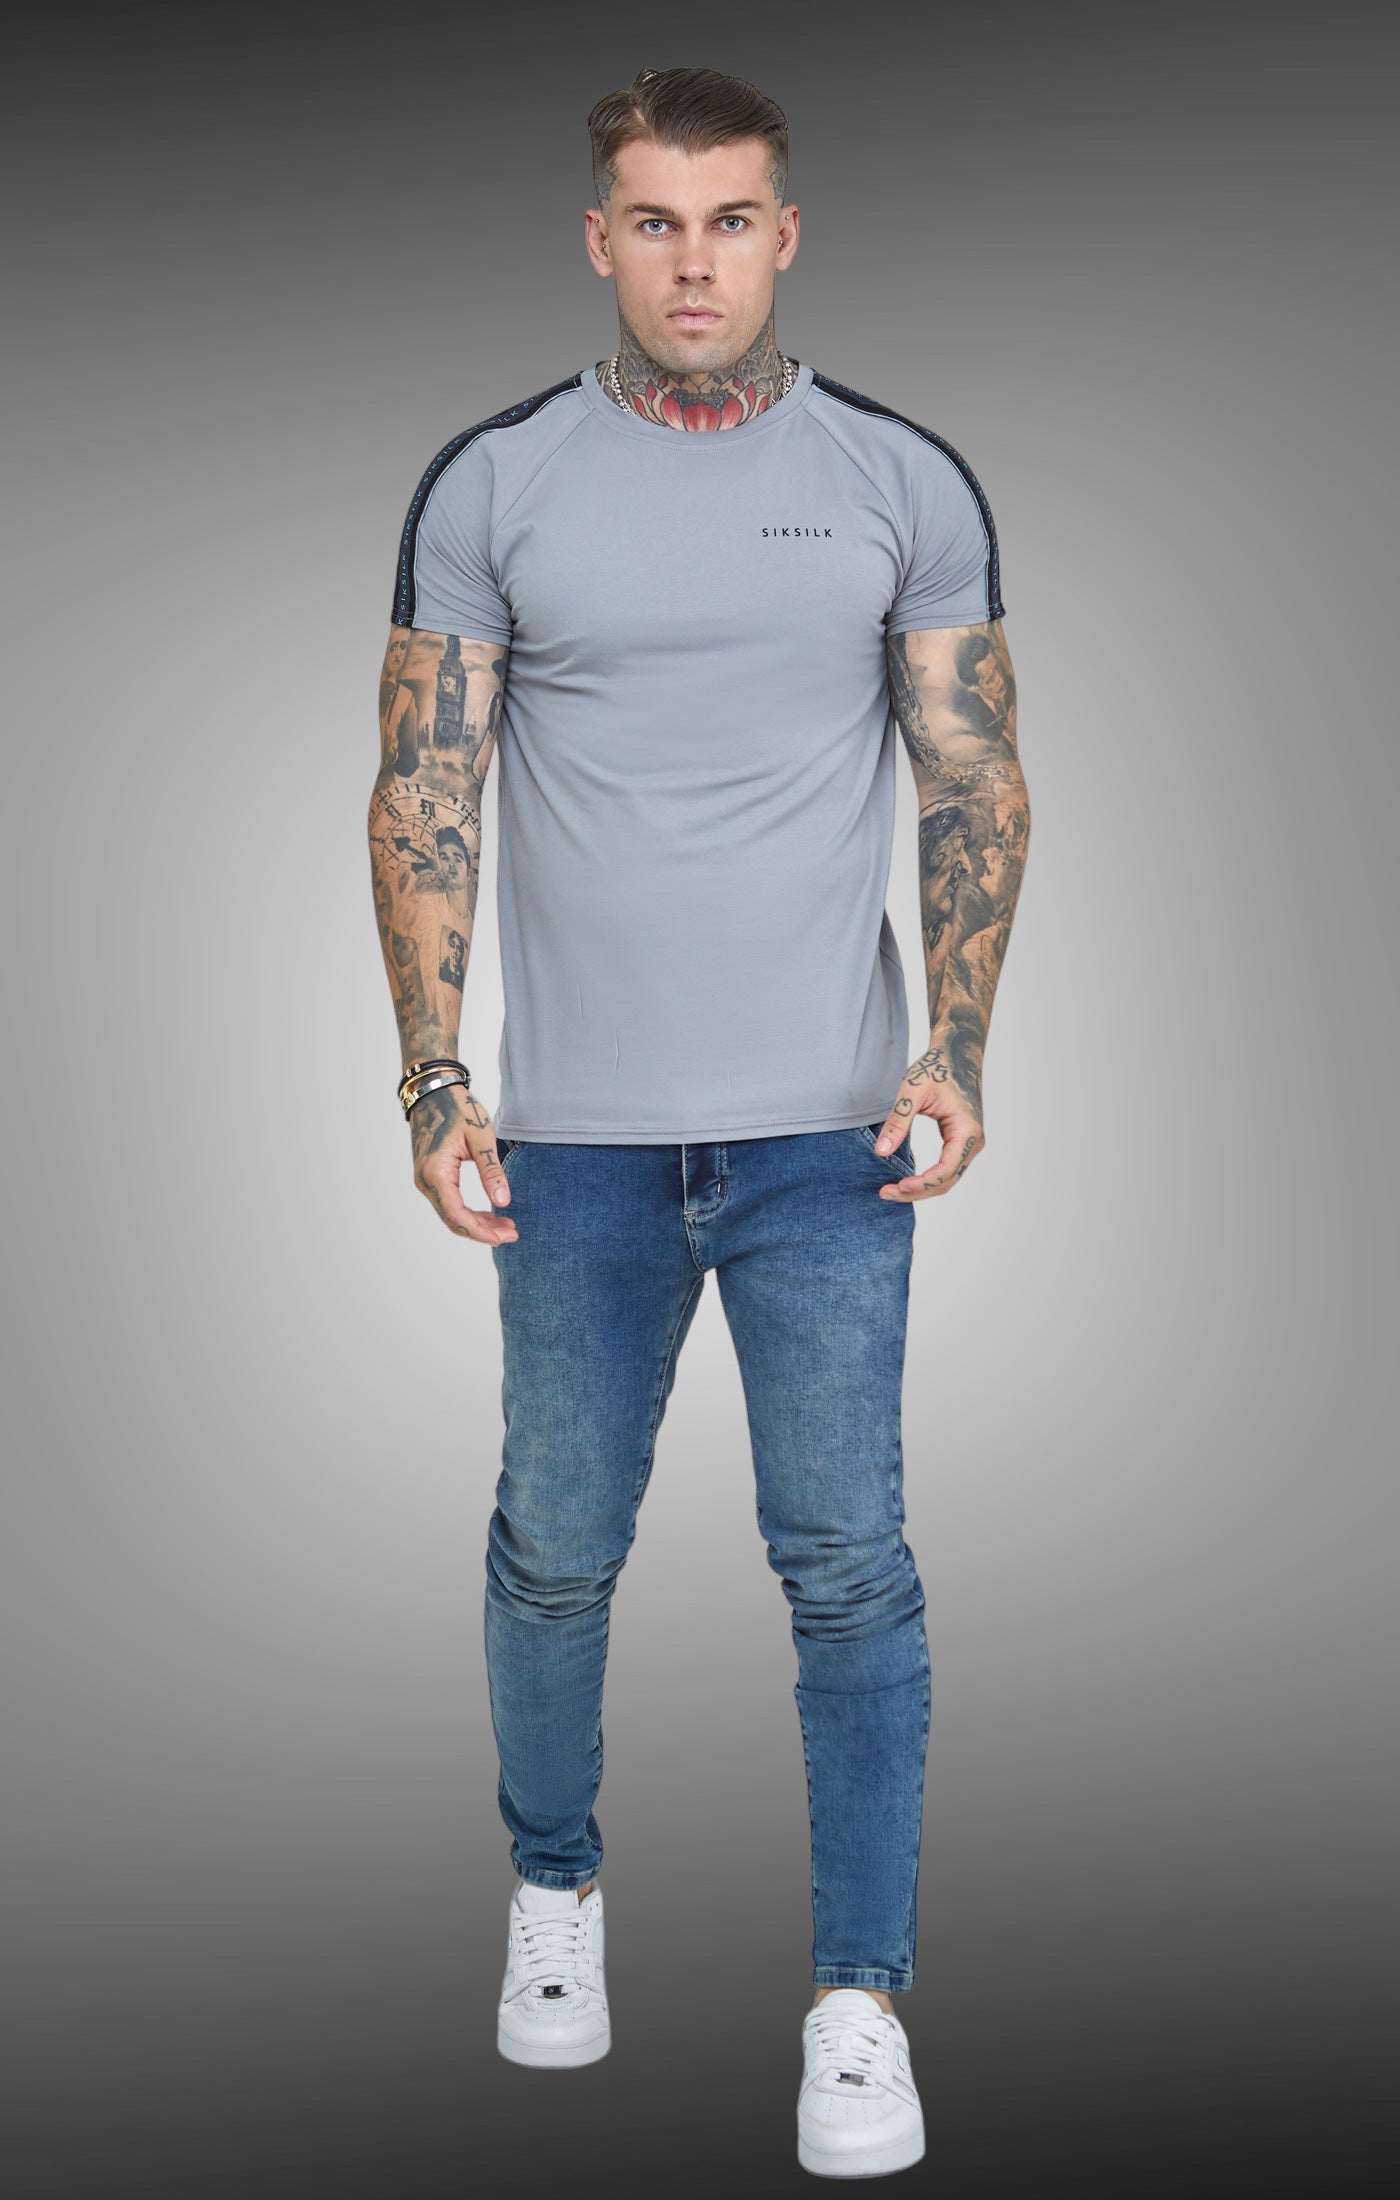 Siksilk - Grey Raglan Tape Muscle Fit T-Shirt - Stayin